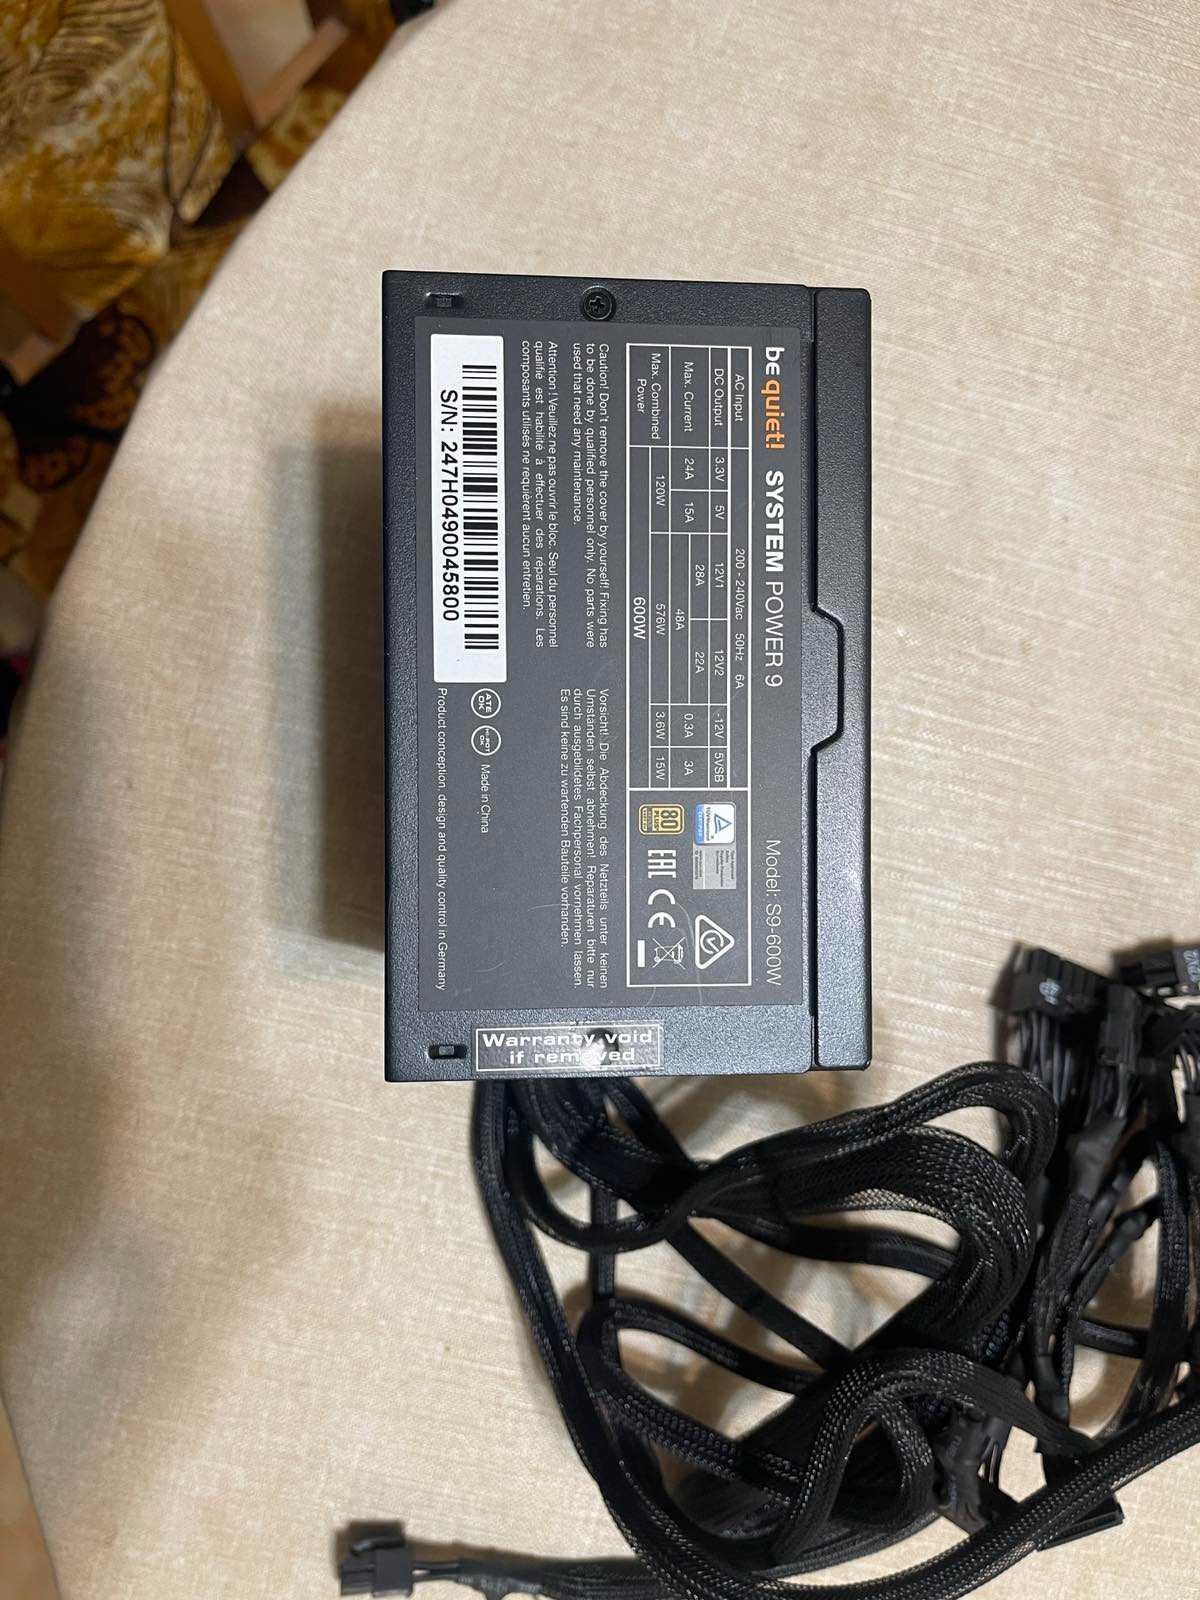 Ram Corsair 16GB 3000 +Be Quiet system power 9 - 600W